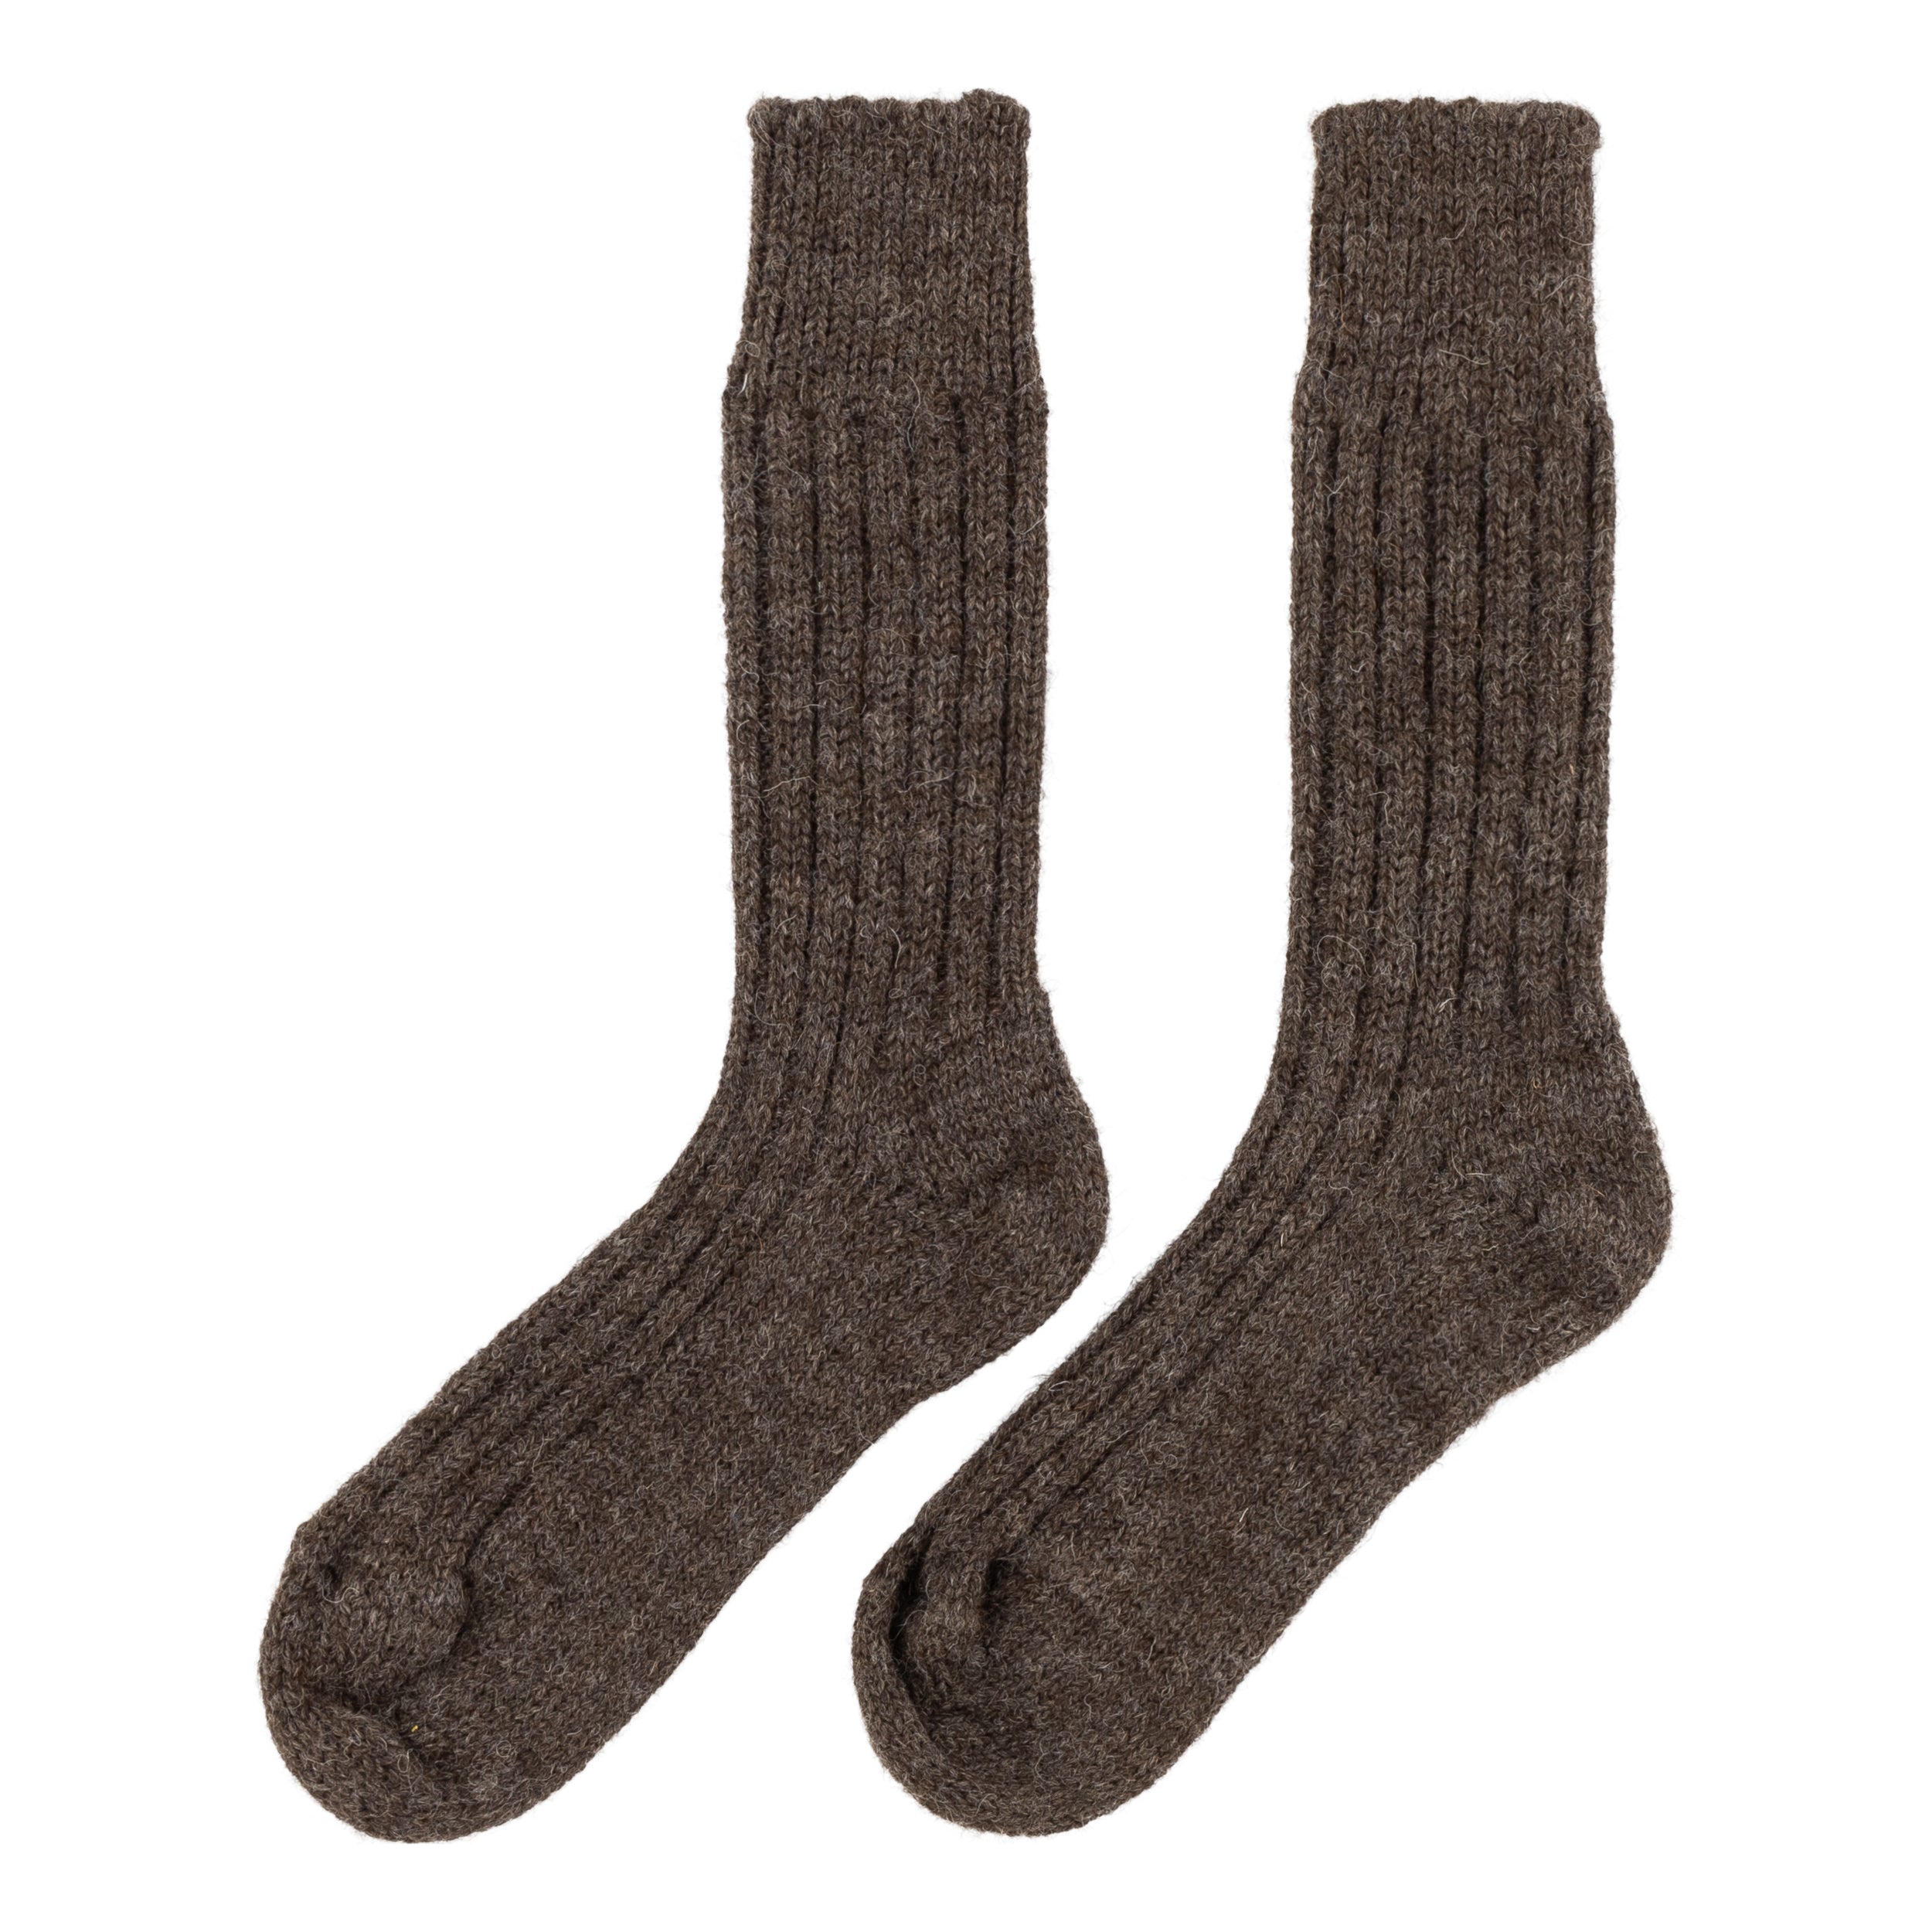 Carrier Company Wool Sock in Peat